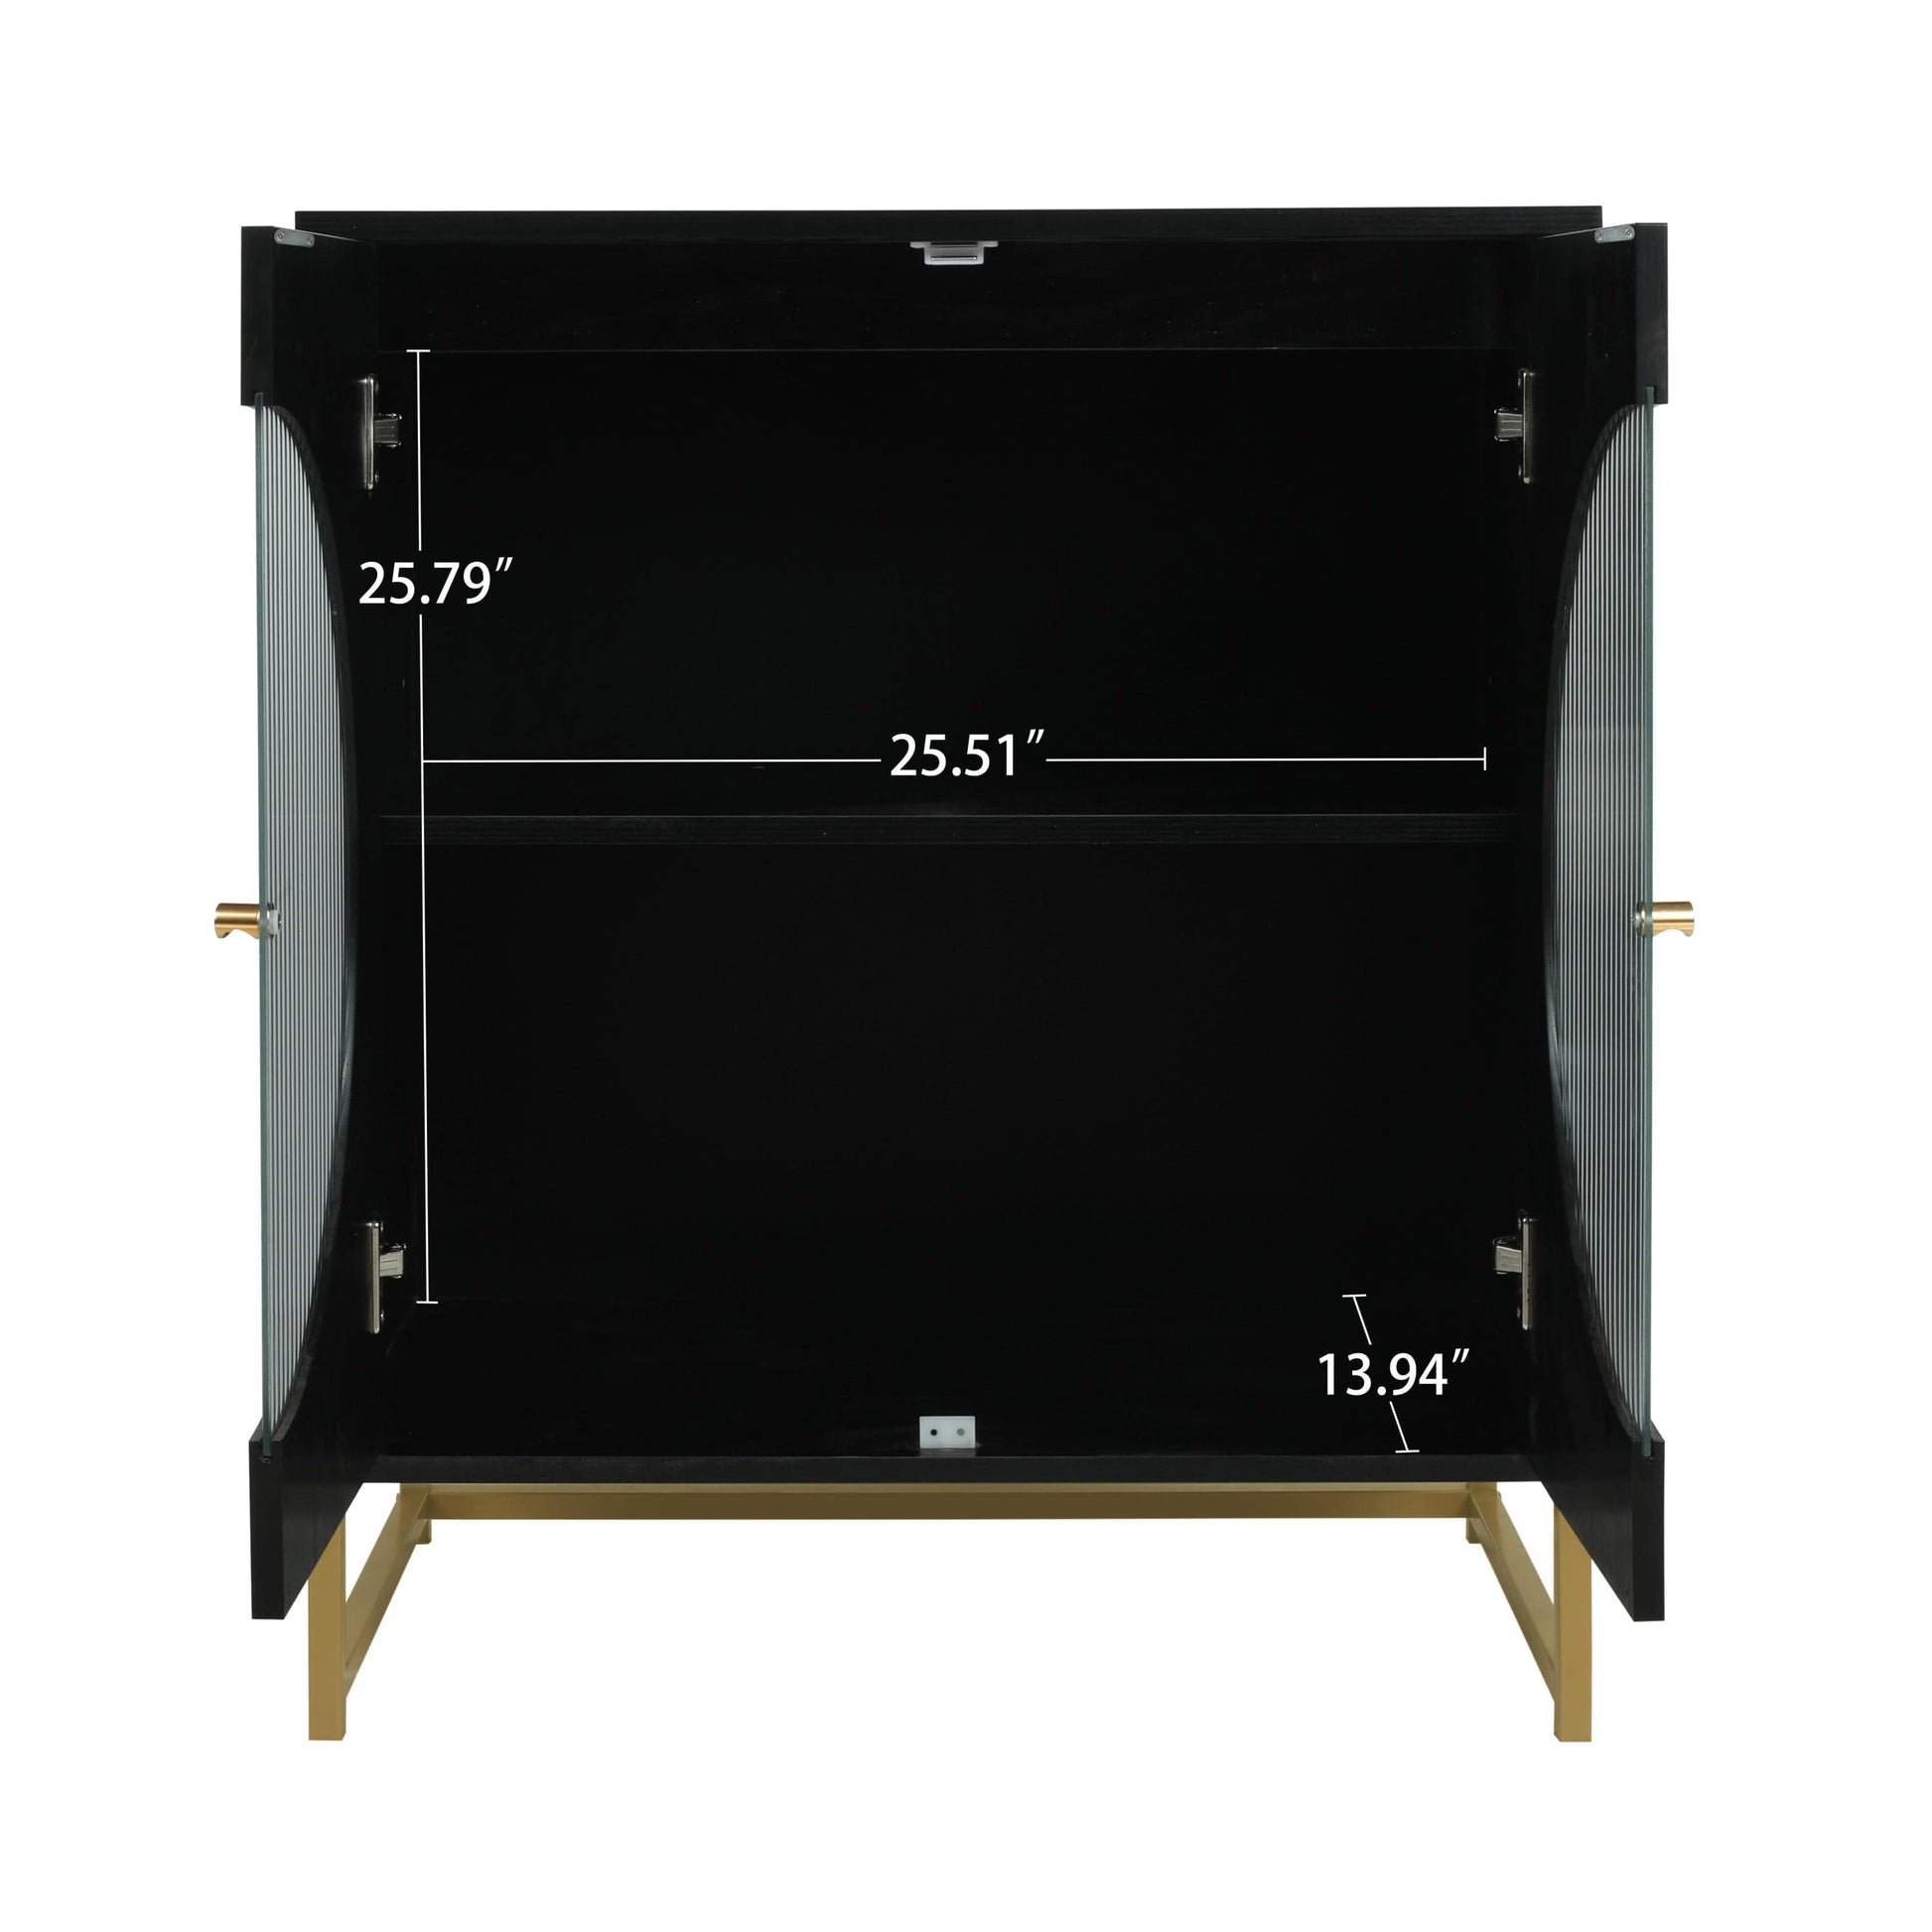 1st Choice Furniture Direct Storage Cabinet 1st Choice Black Glass Door Storage Cabinet for Kitchen